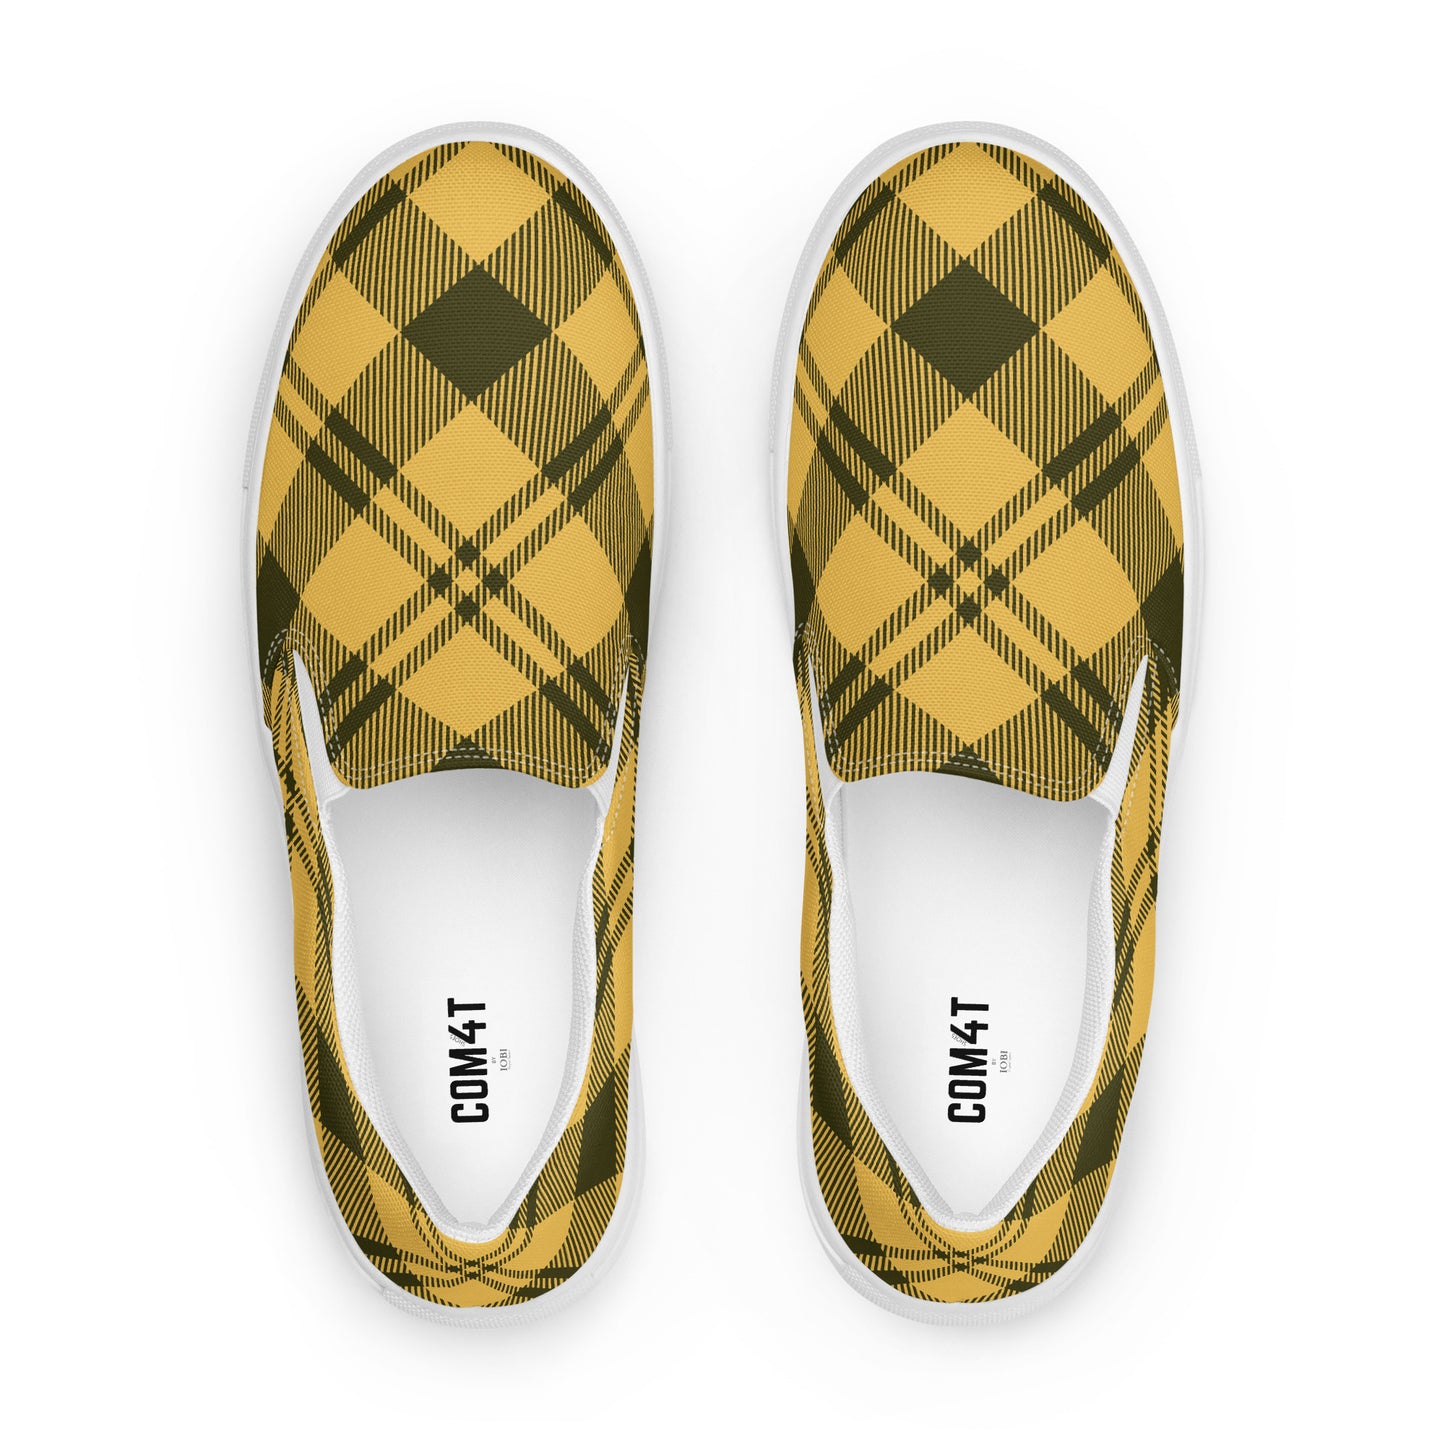 COM4T Yellow Men’s Slip-On Canvas Fashion Shoes by IOBI Original Apparel